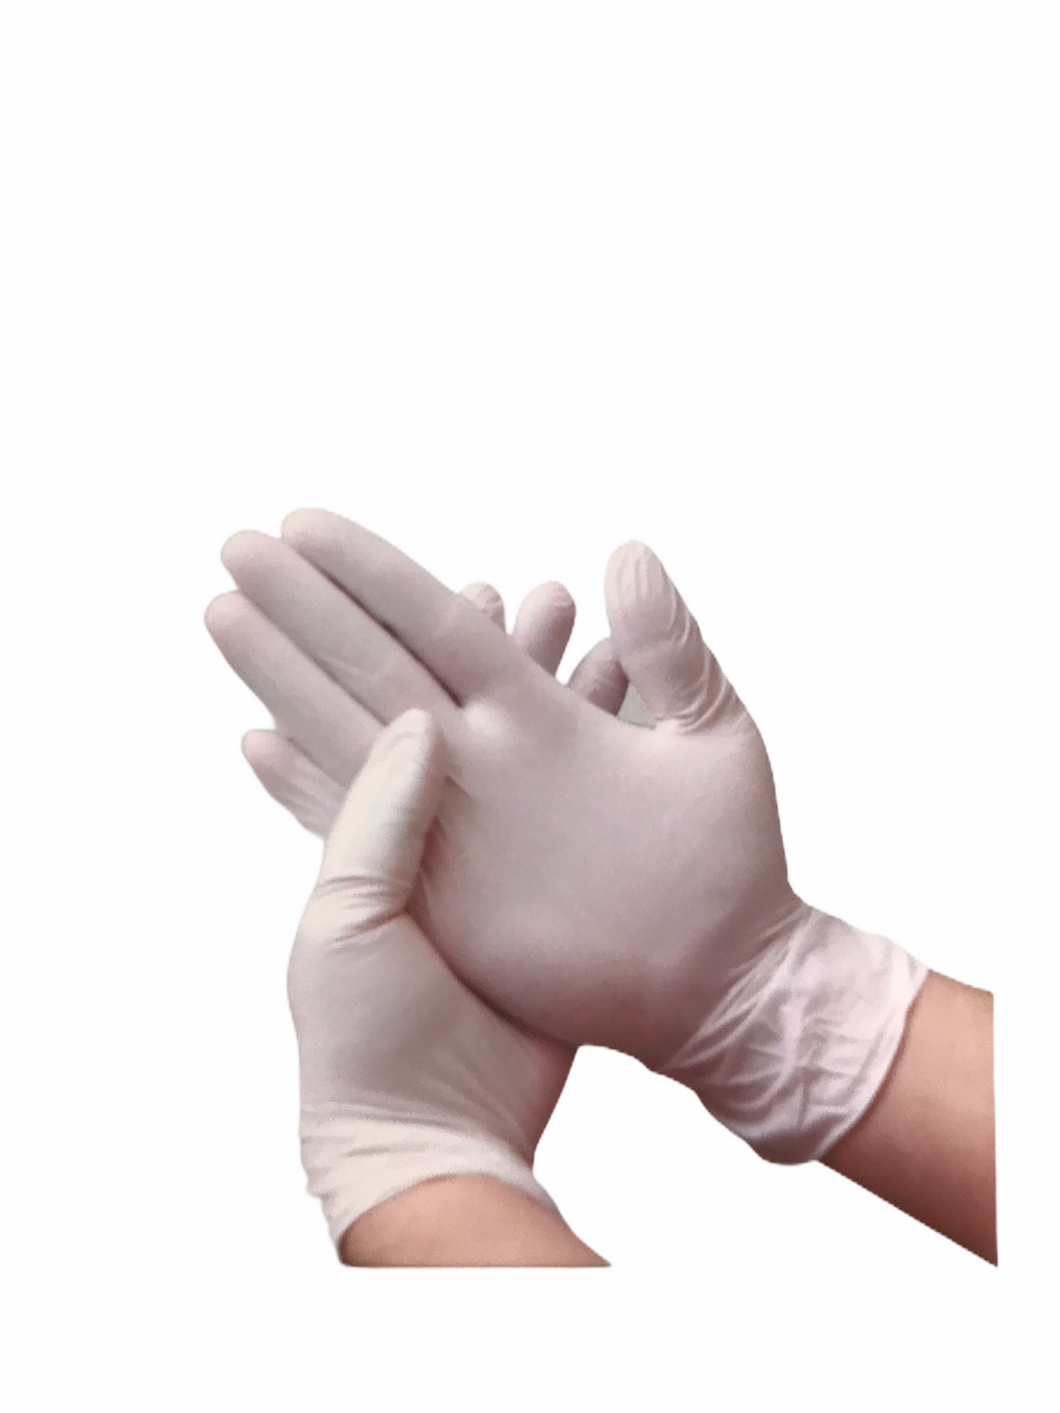 Vinyl Examination Disposable Gloves